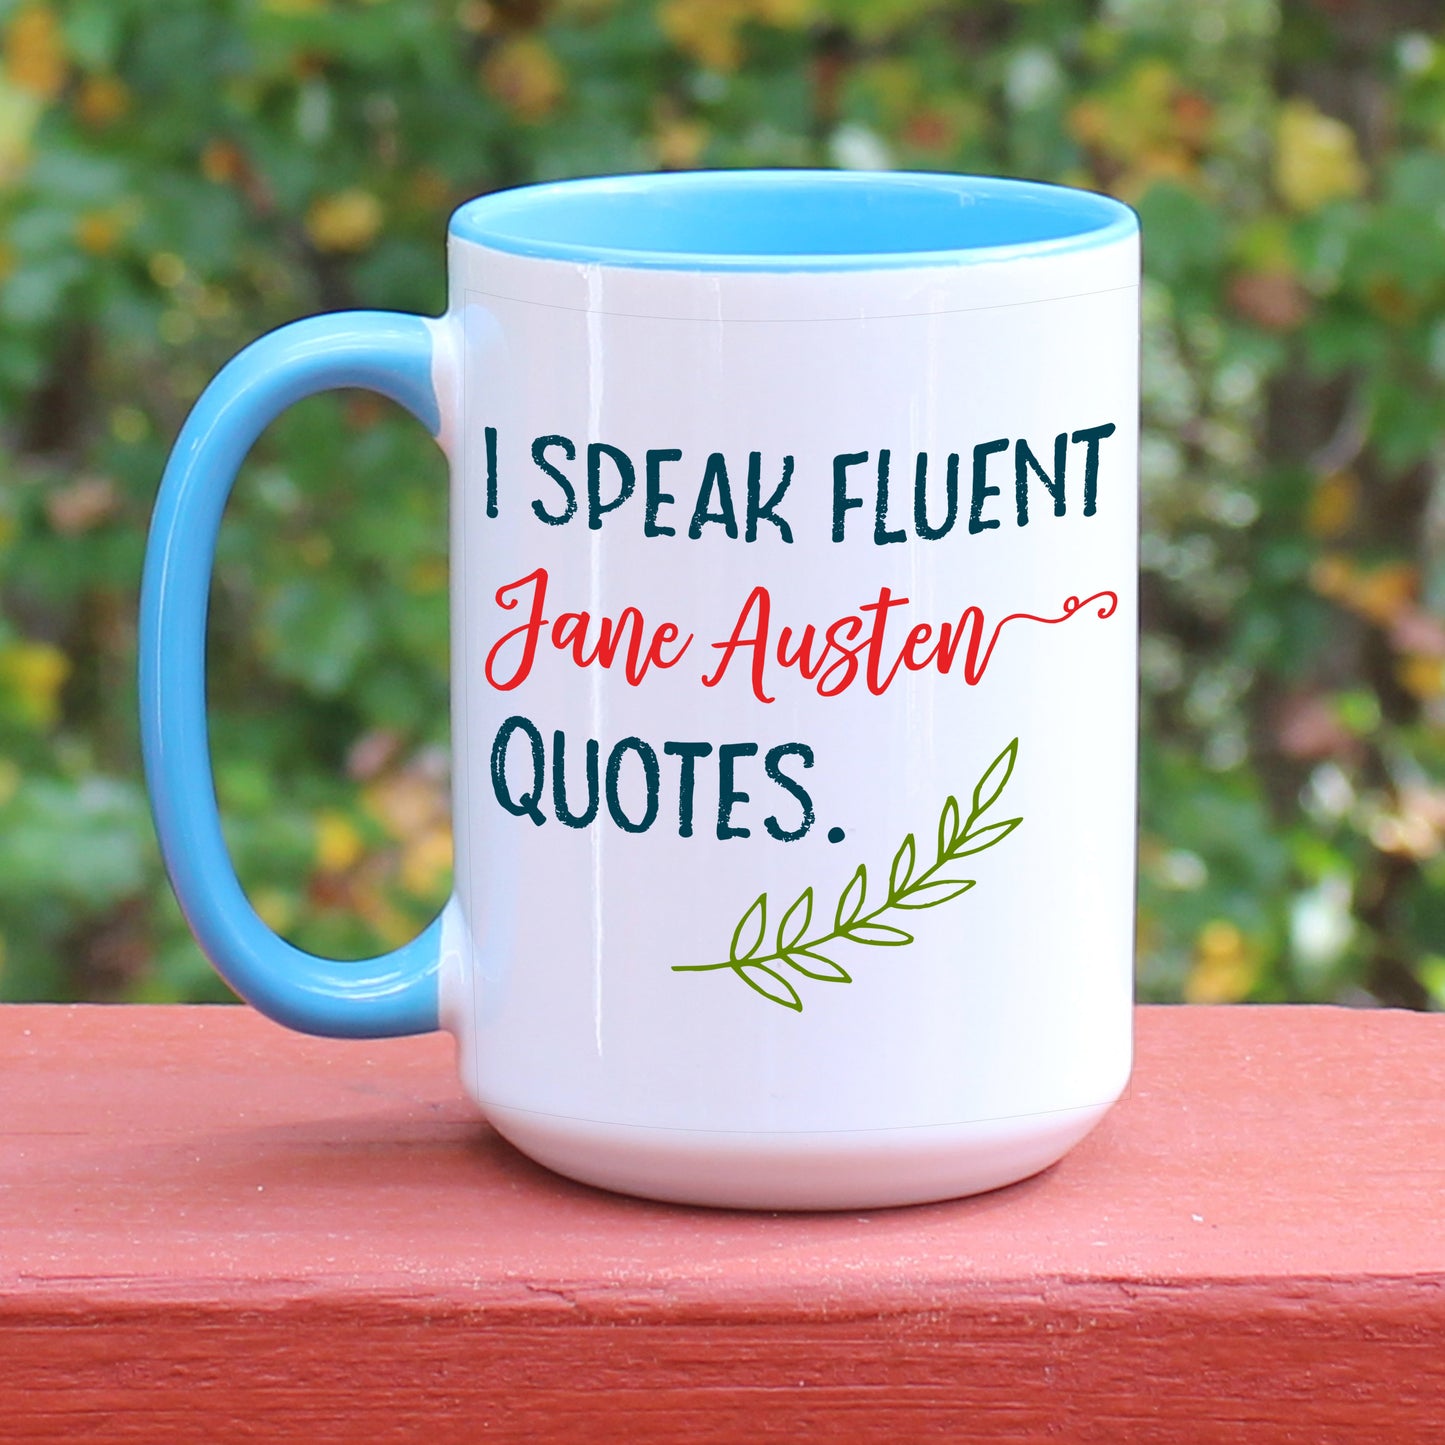 I Speak Fluent Jane Austen Quotes Coffee Mug with Blue Handle